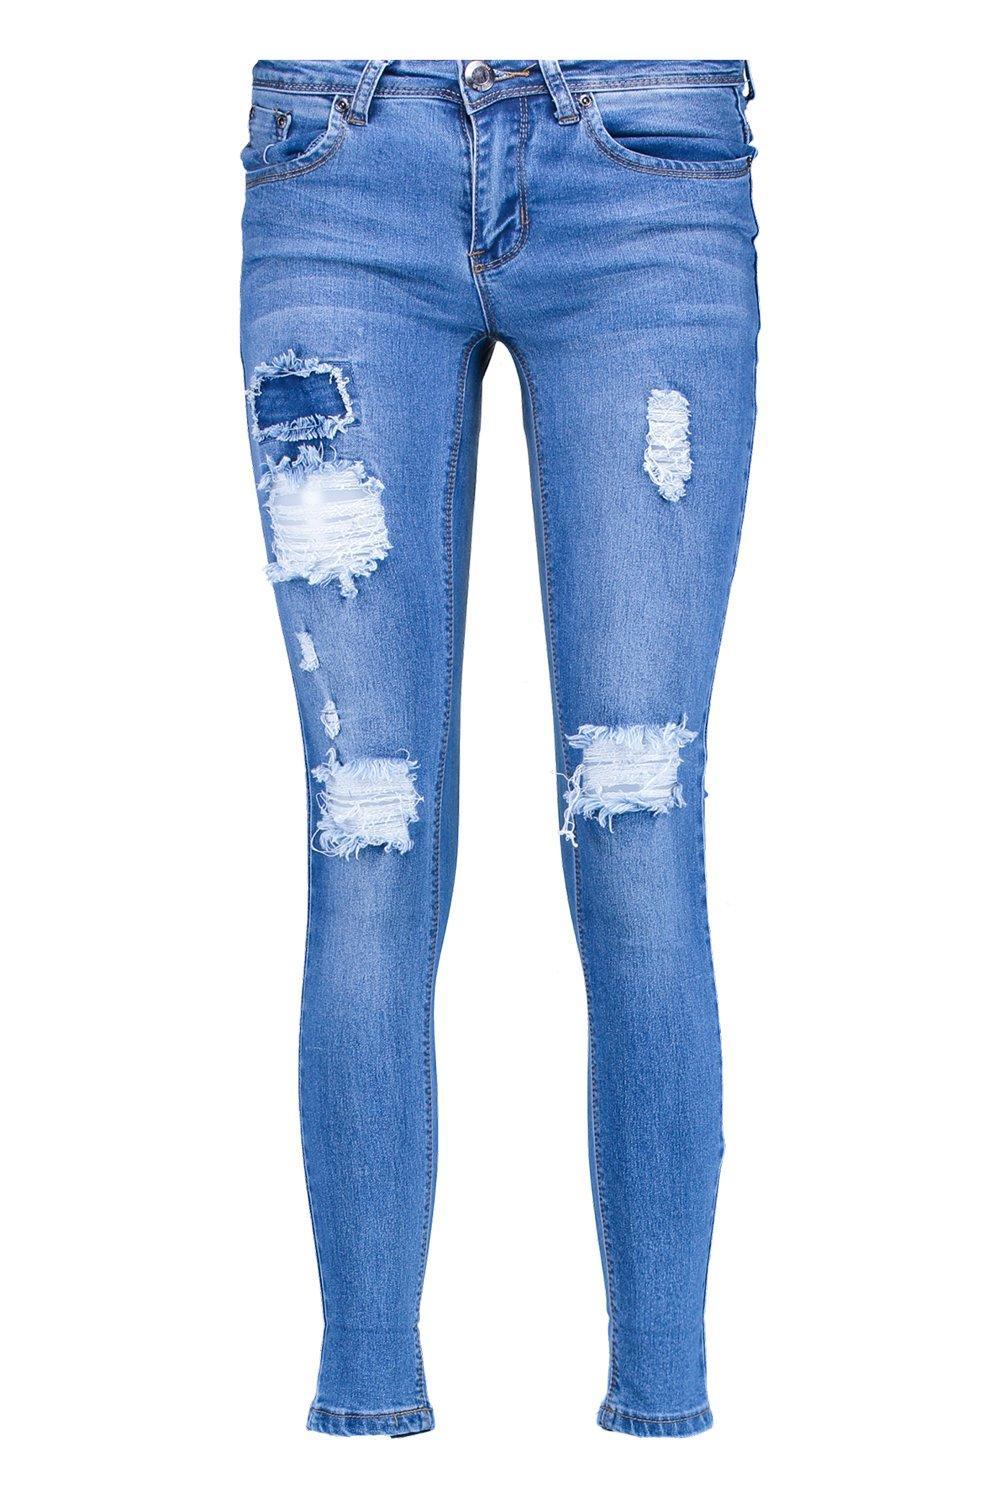 Boohoo Denim Petite Matilda Mid Rise Light Ripped Skinny Jeans in Blue ...